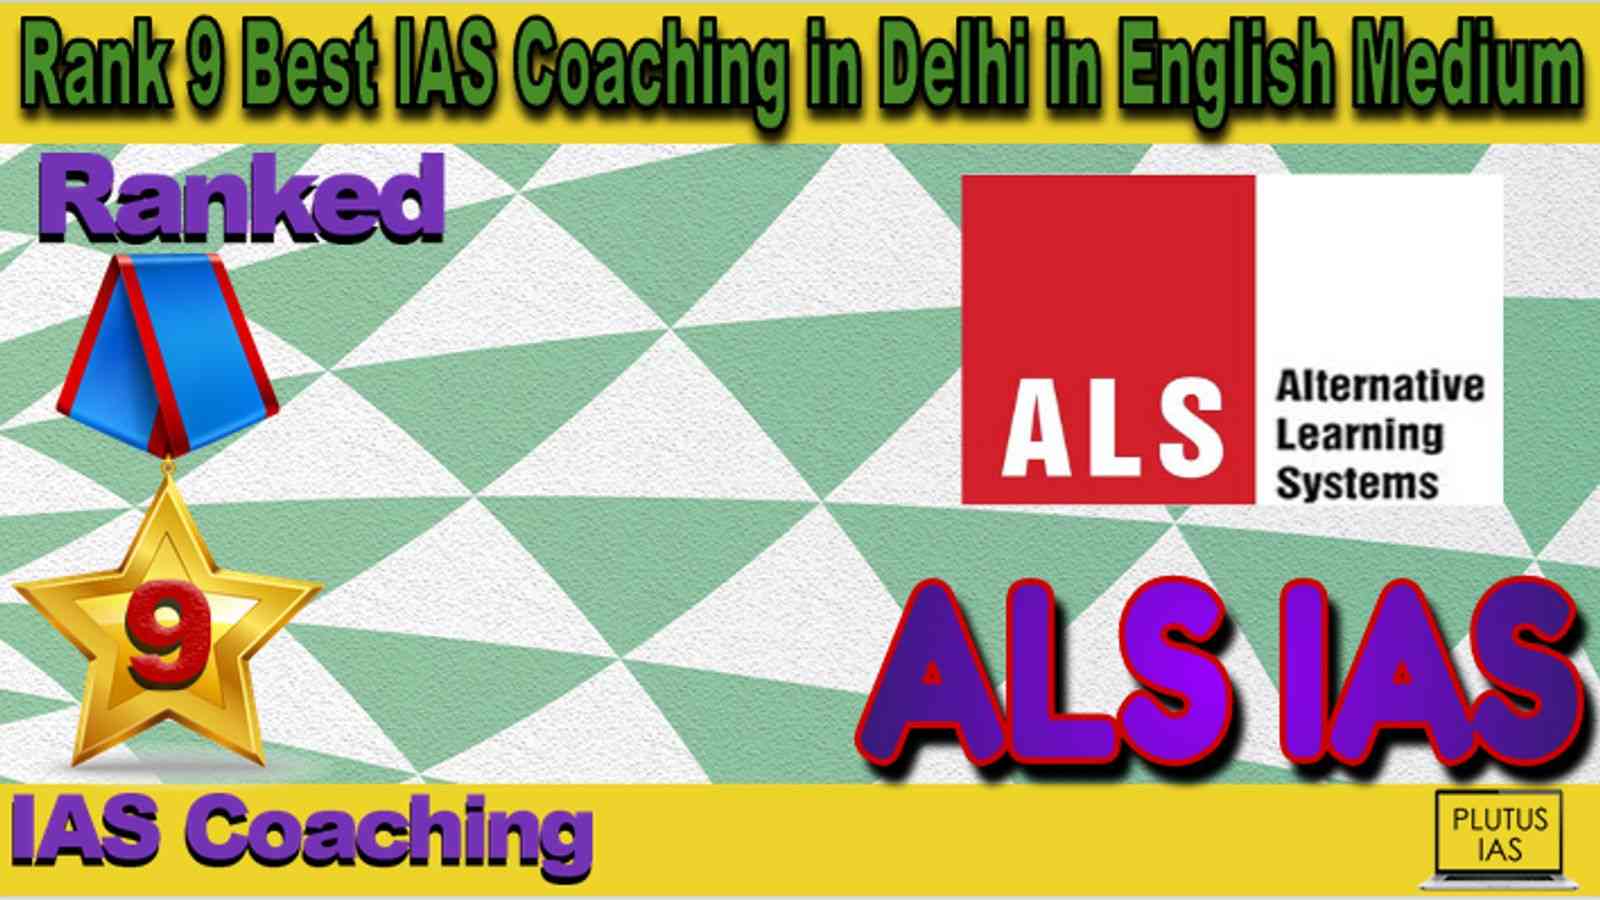 Rank 9 Best IAS Coaching in Delhi in English Medium